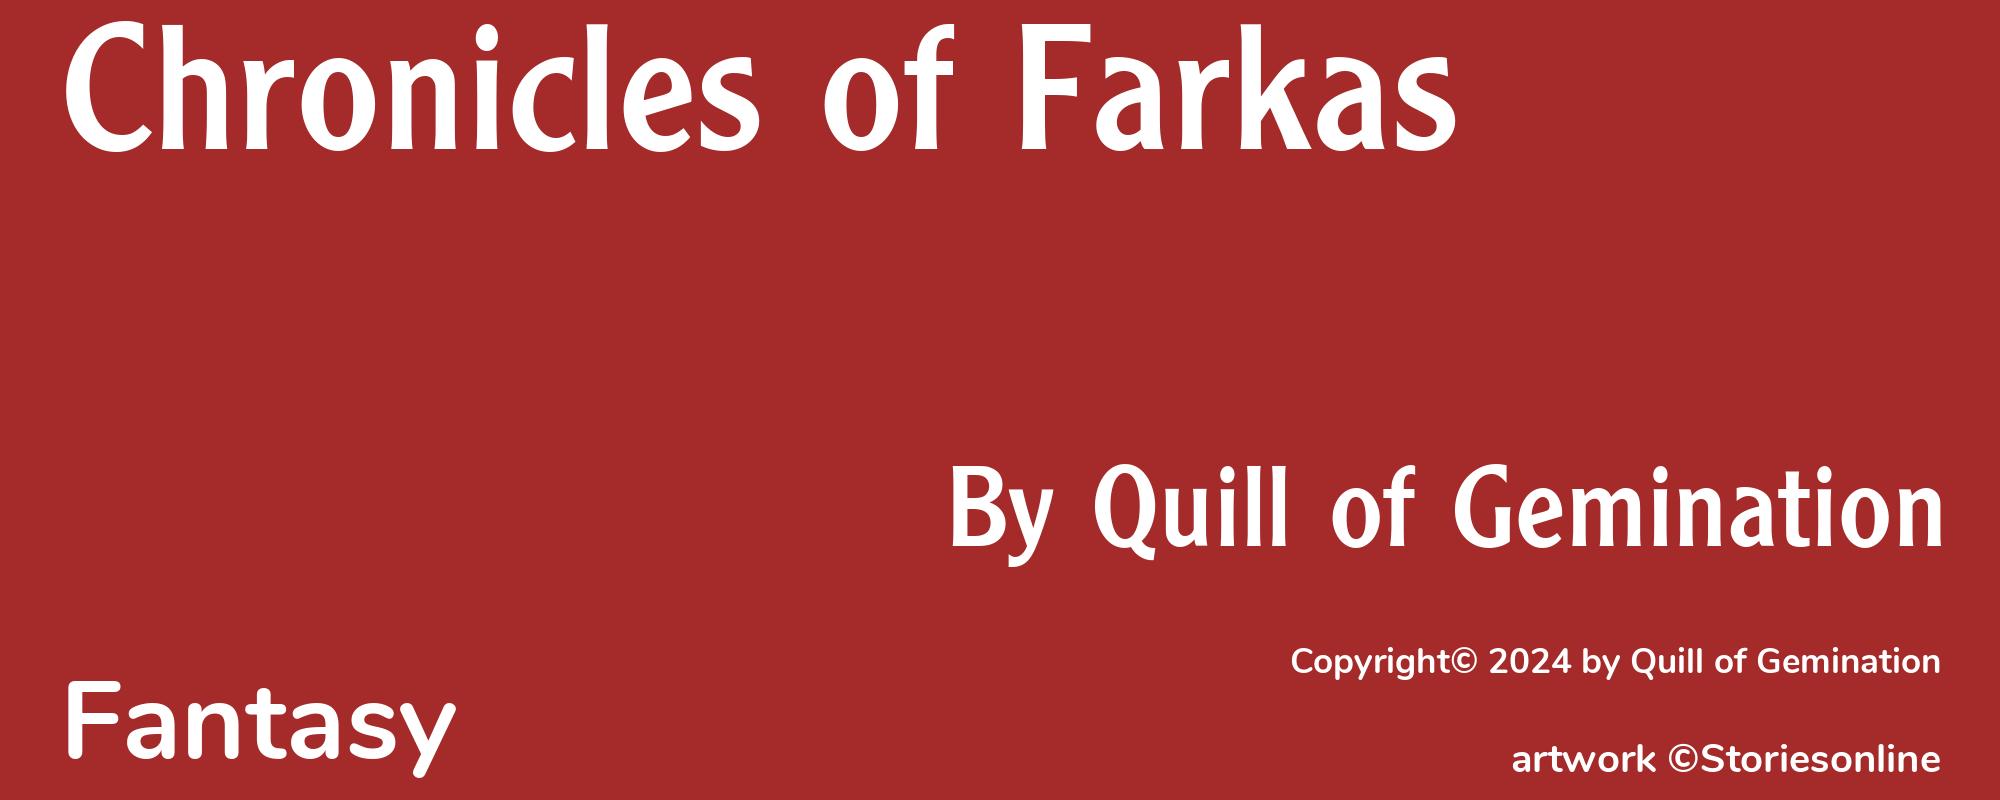 Chronicles of Farkas - Cover